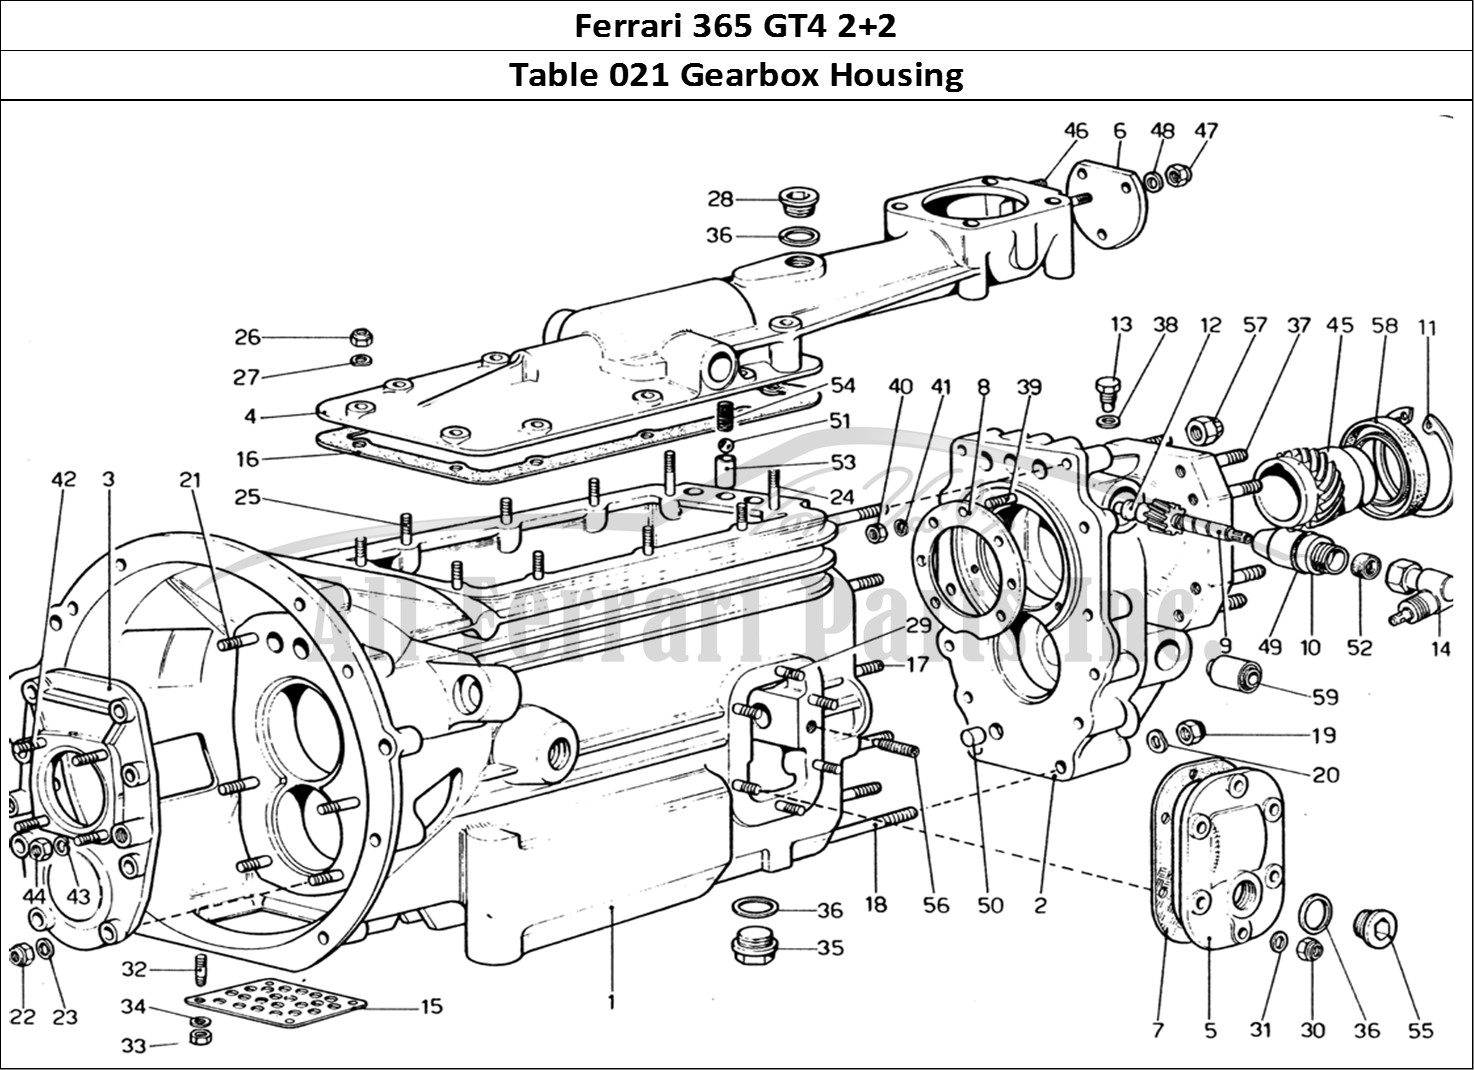 Ferrari Parts Ferrari 365 GT4 2+2 (1973) Page 021 Gearbox